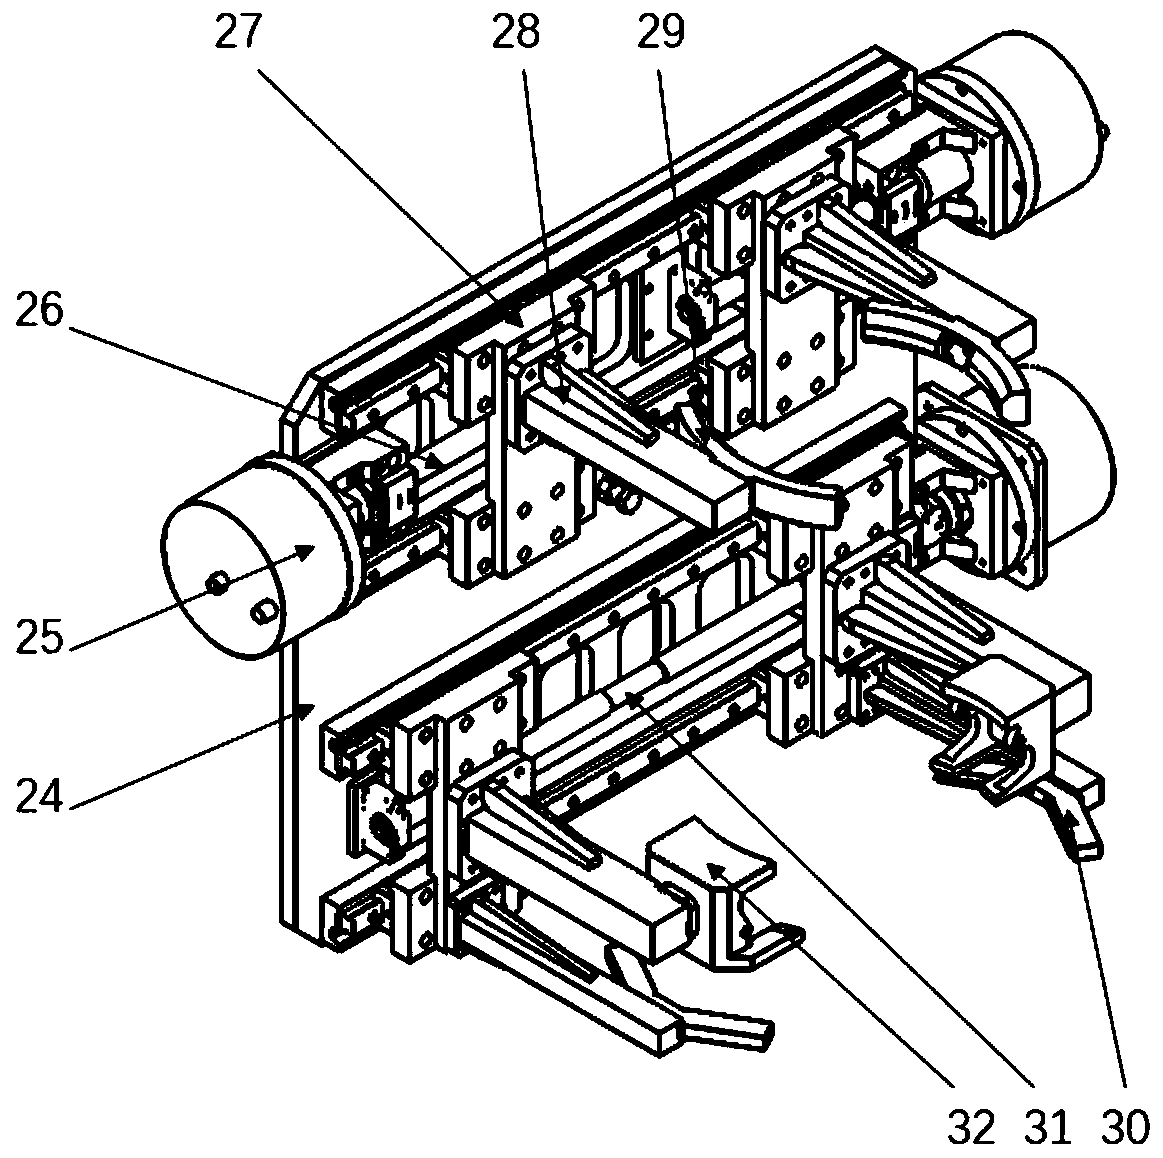 Reconfigurable man-machine coordination assembling system for aero-engine